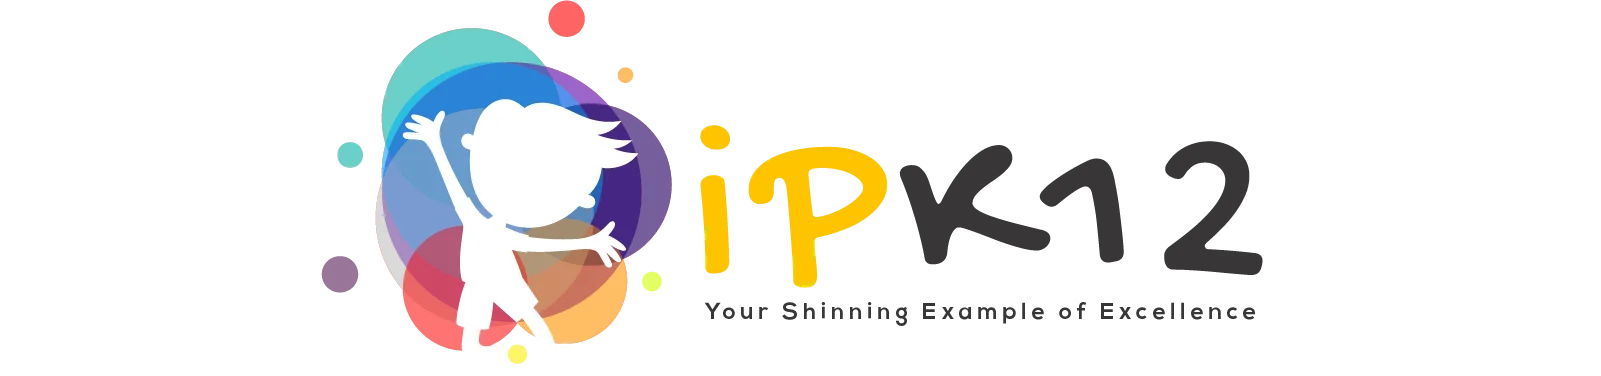 Blog | IPK12